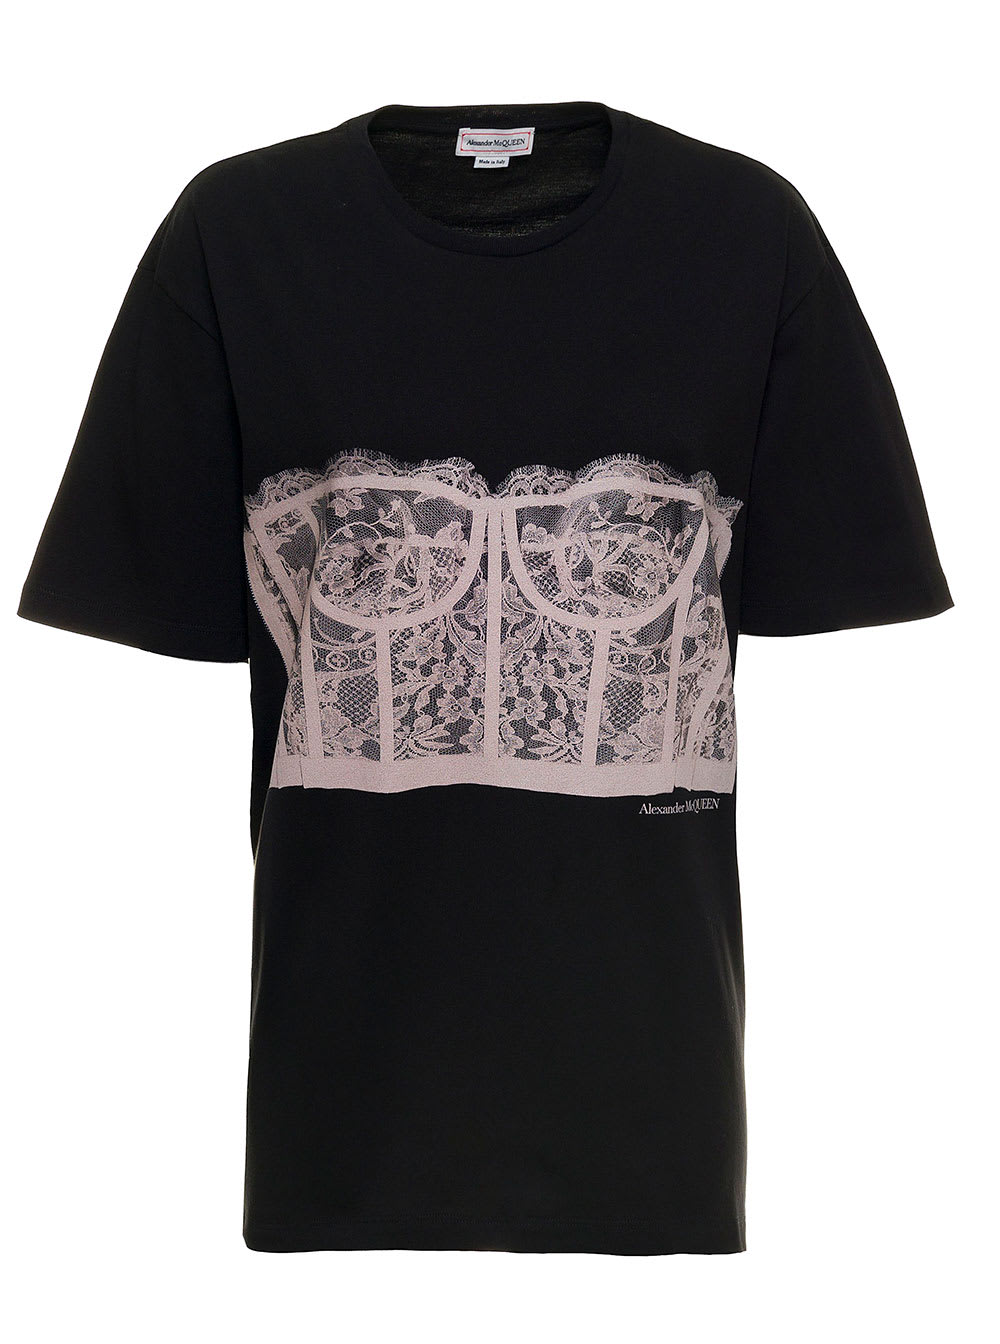 Alexander Mcqueen Womans Black Cotton T-shirt With Corset Print